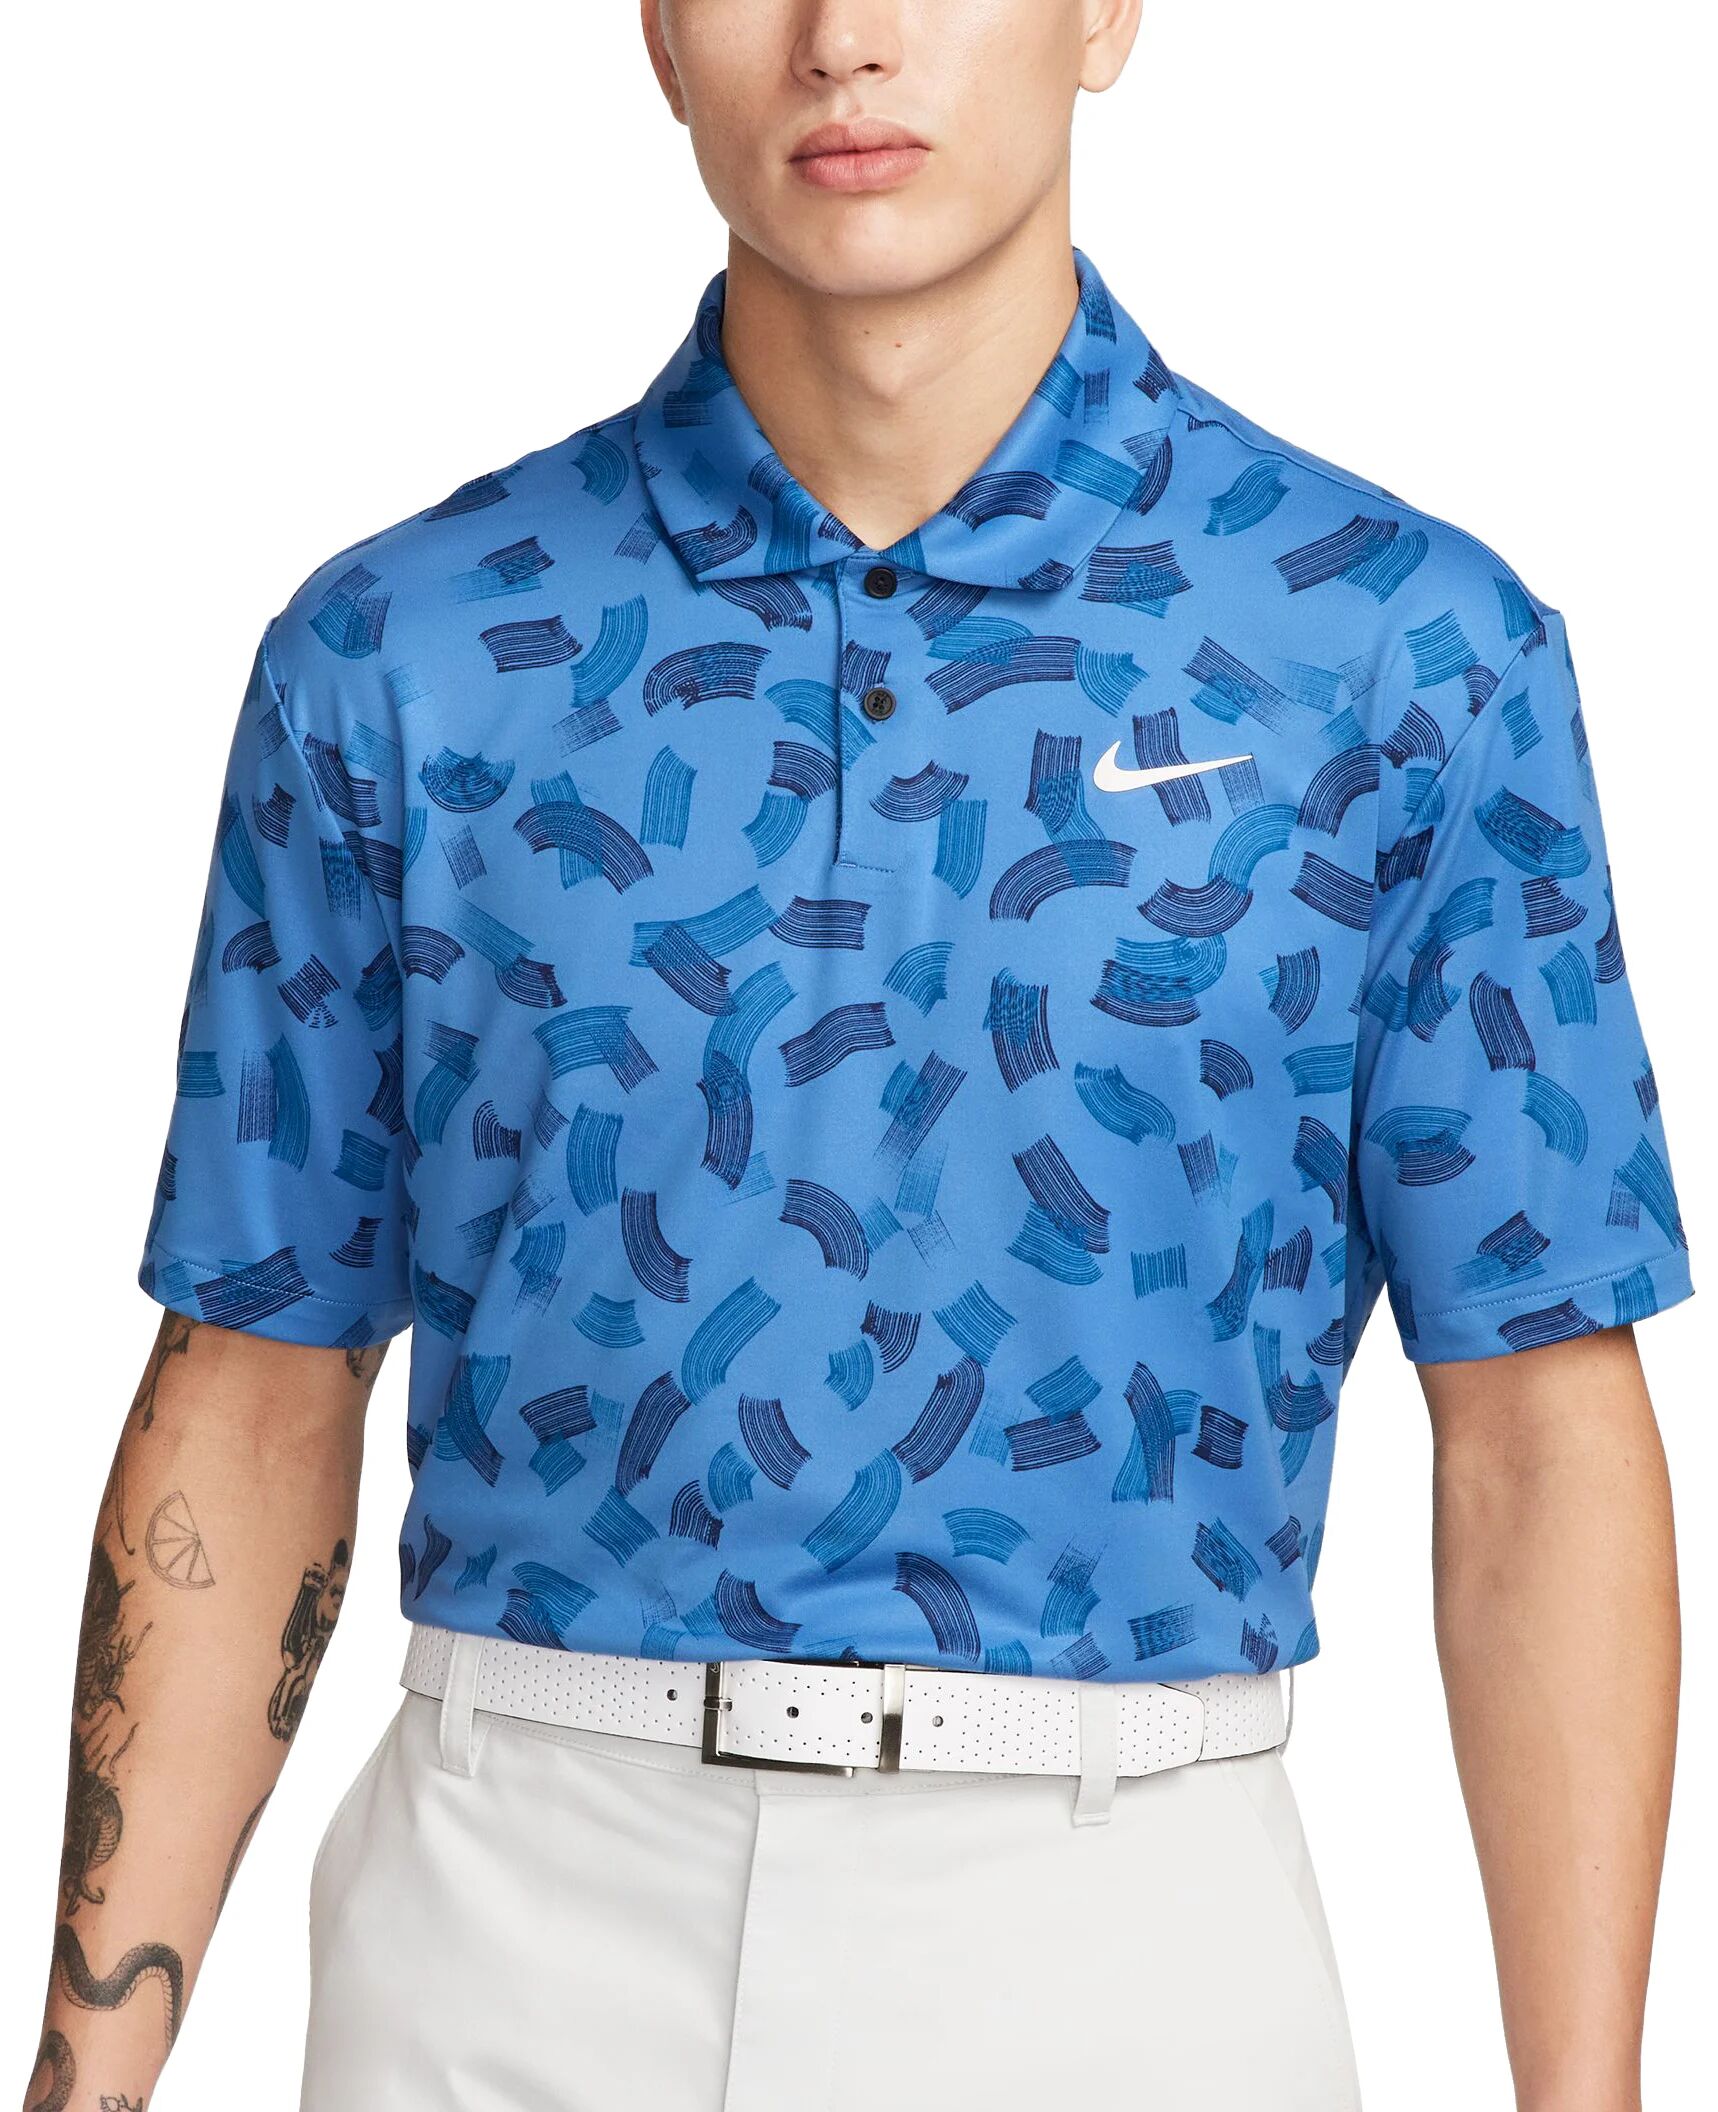 Nike Tour Dri-FIT Men's Golf Polo - Blue, Size: Large